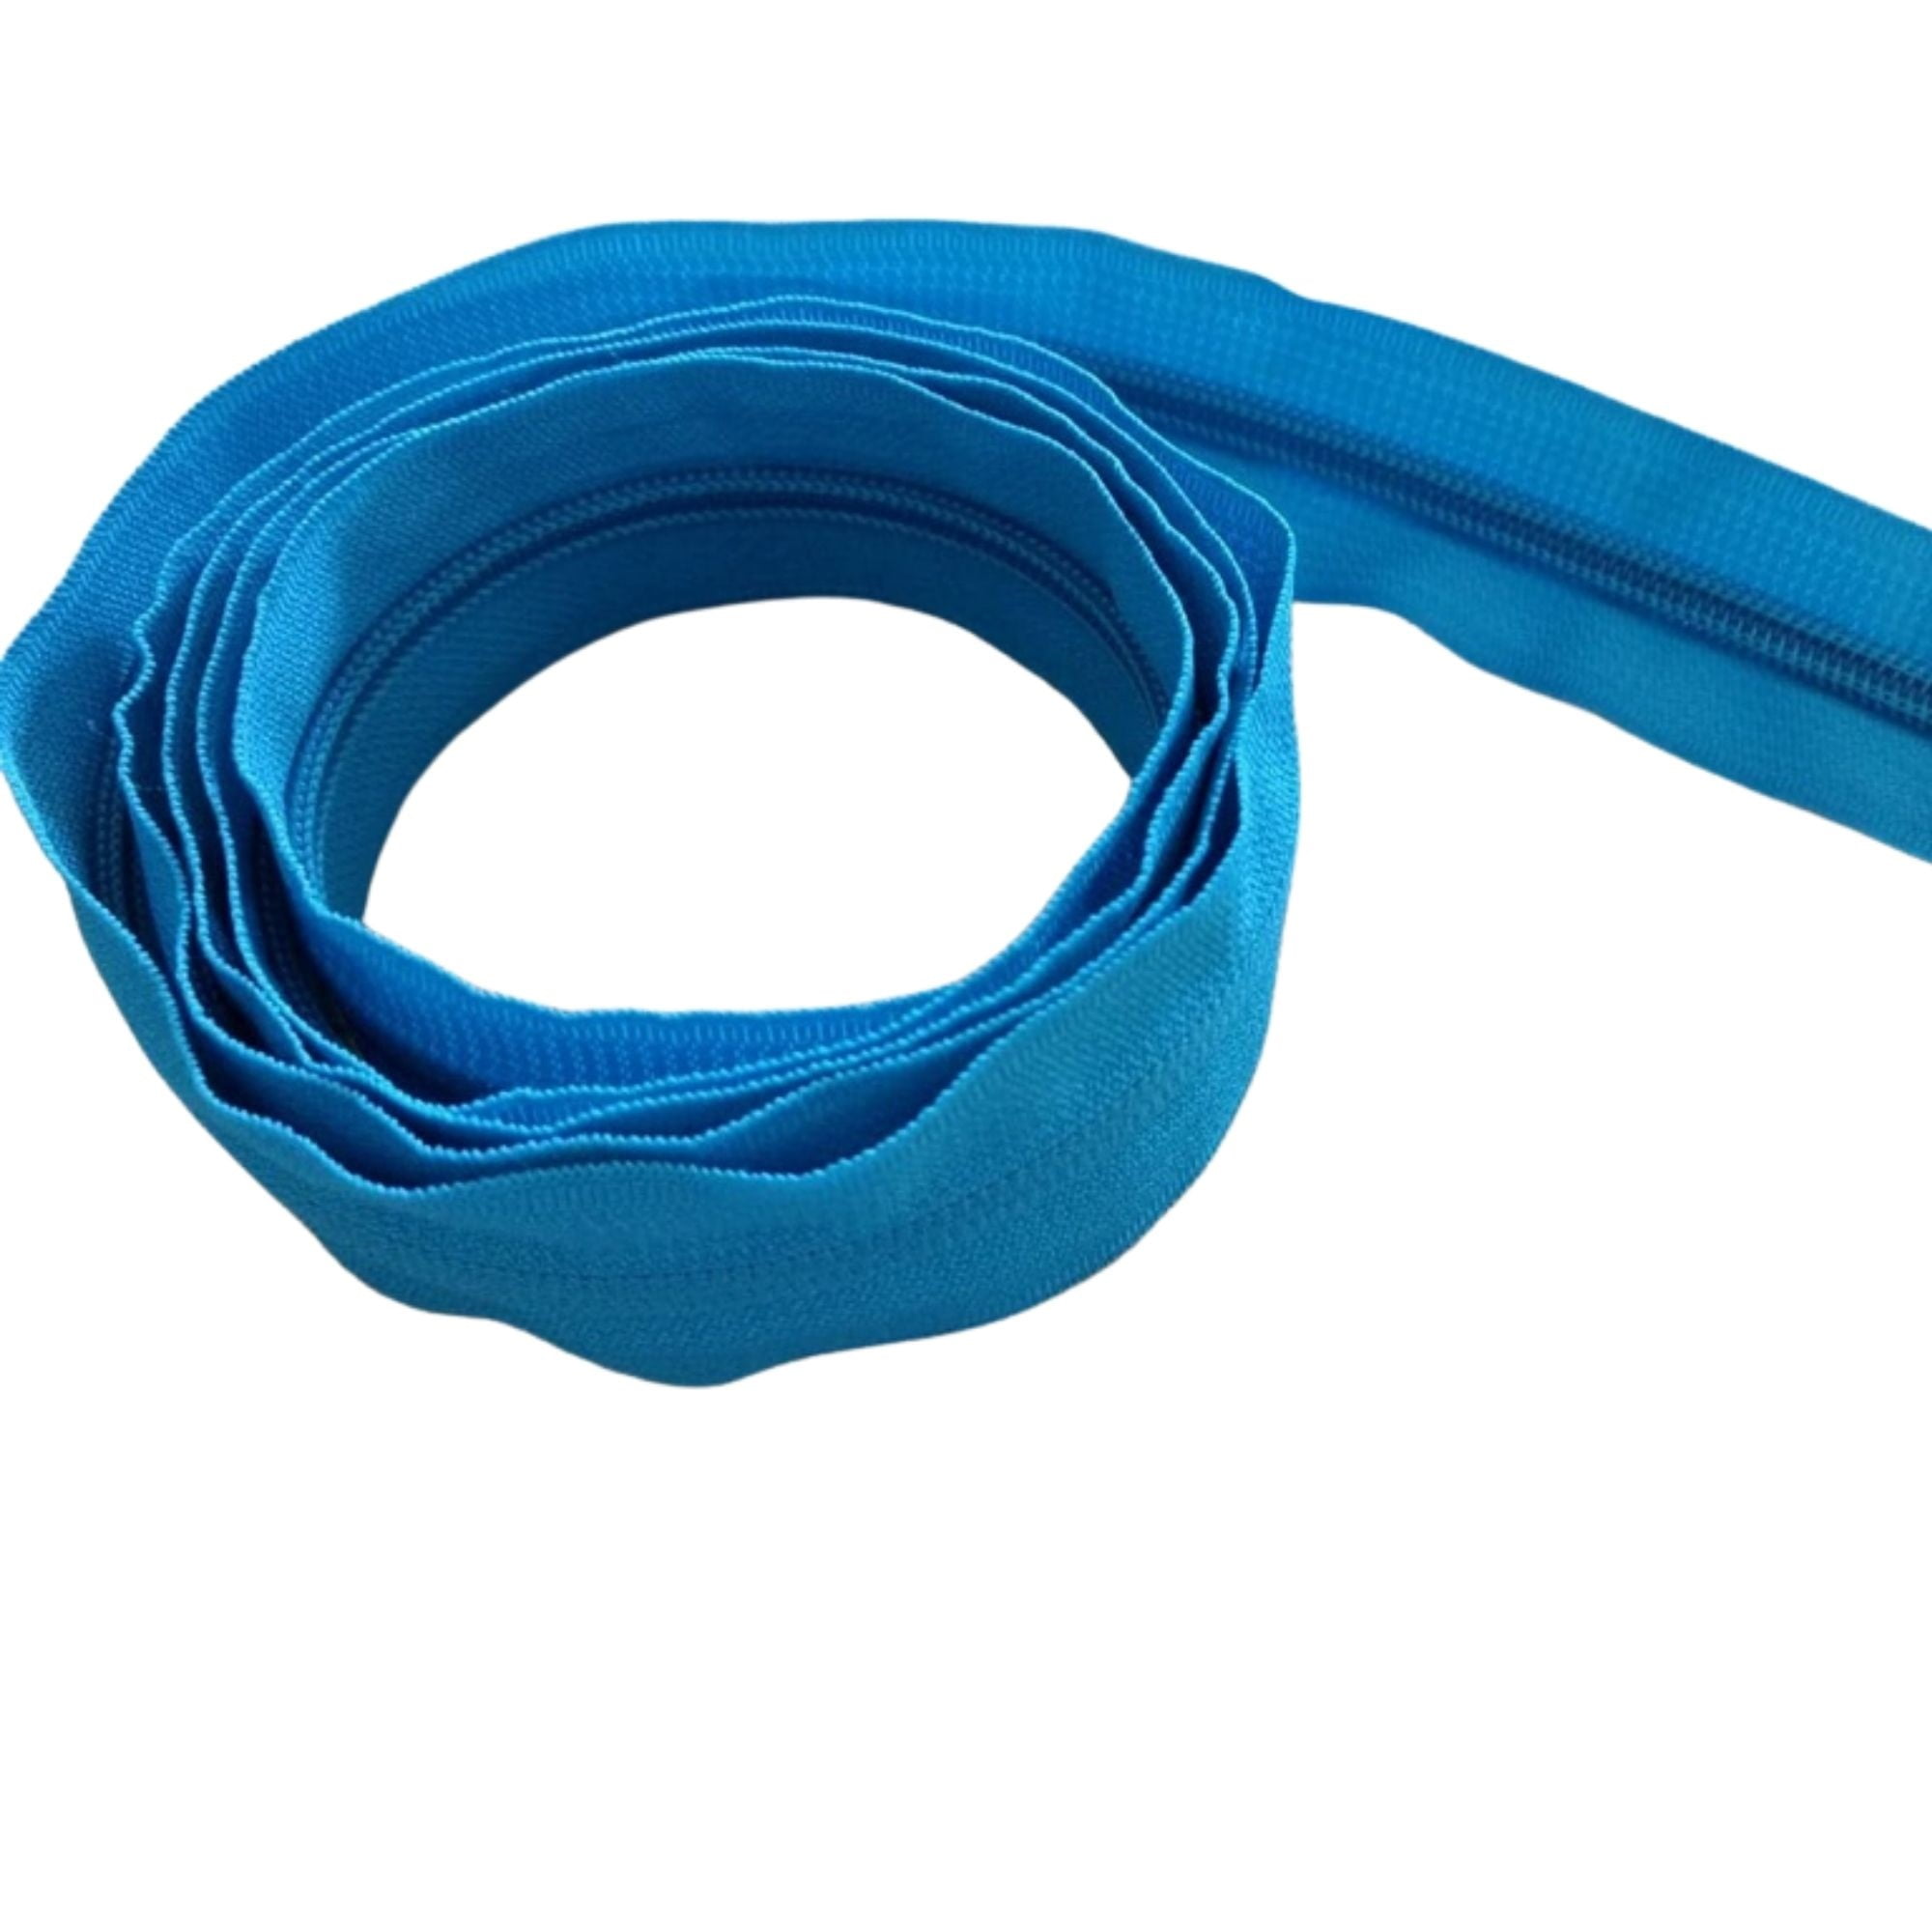 Zíper Grosso nº 5 (3 cm) - Azul Turquesa 